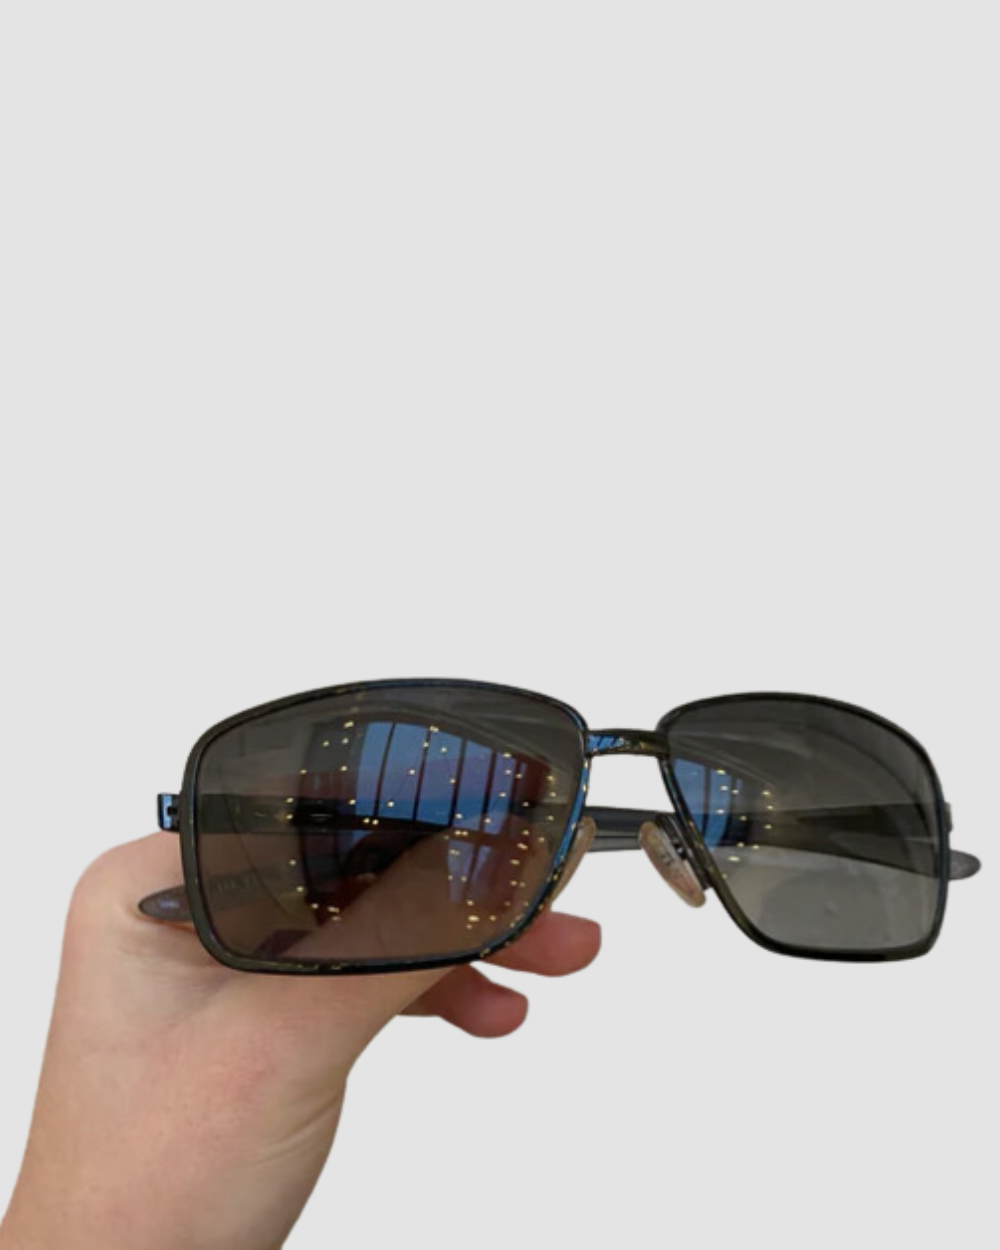 YSL sunglasses